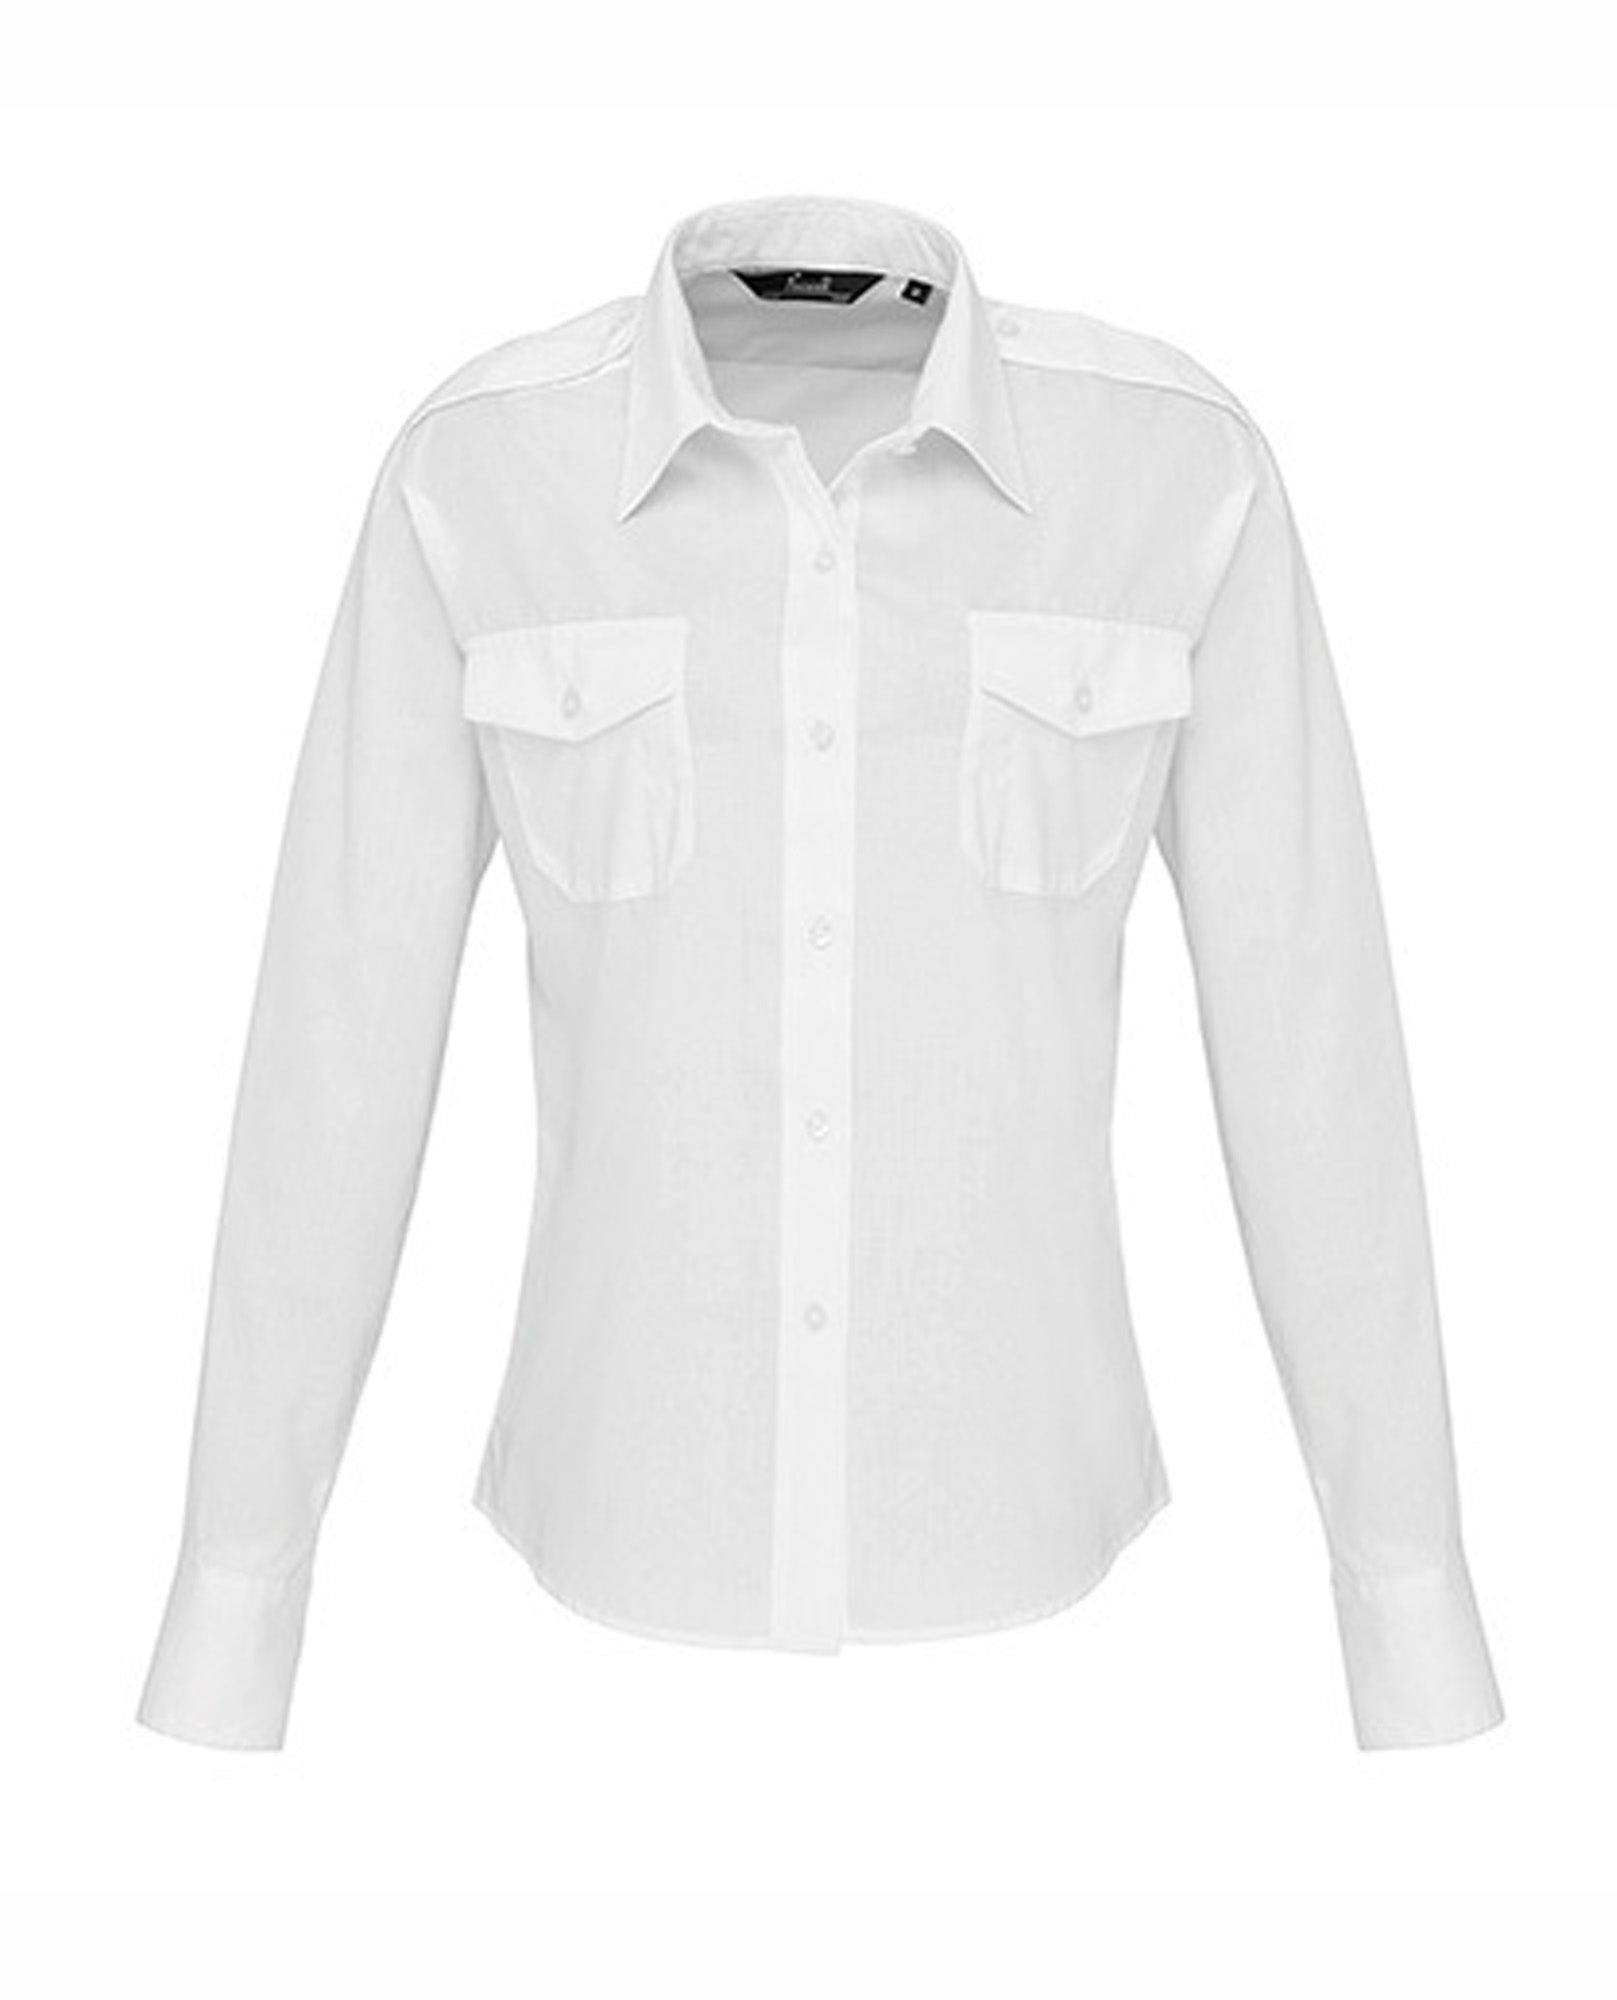 100% PES shirt / Lady - 50080529